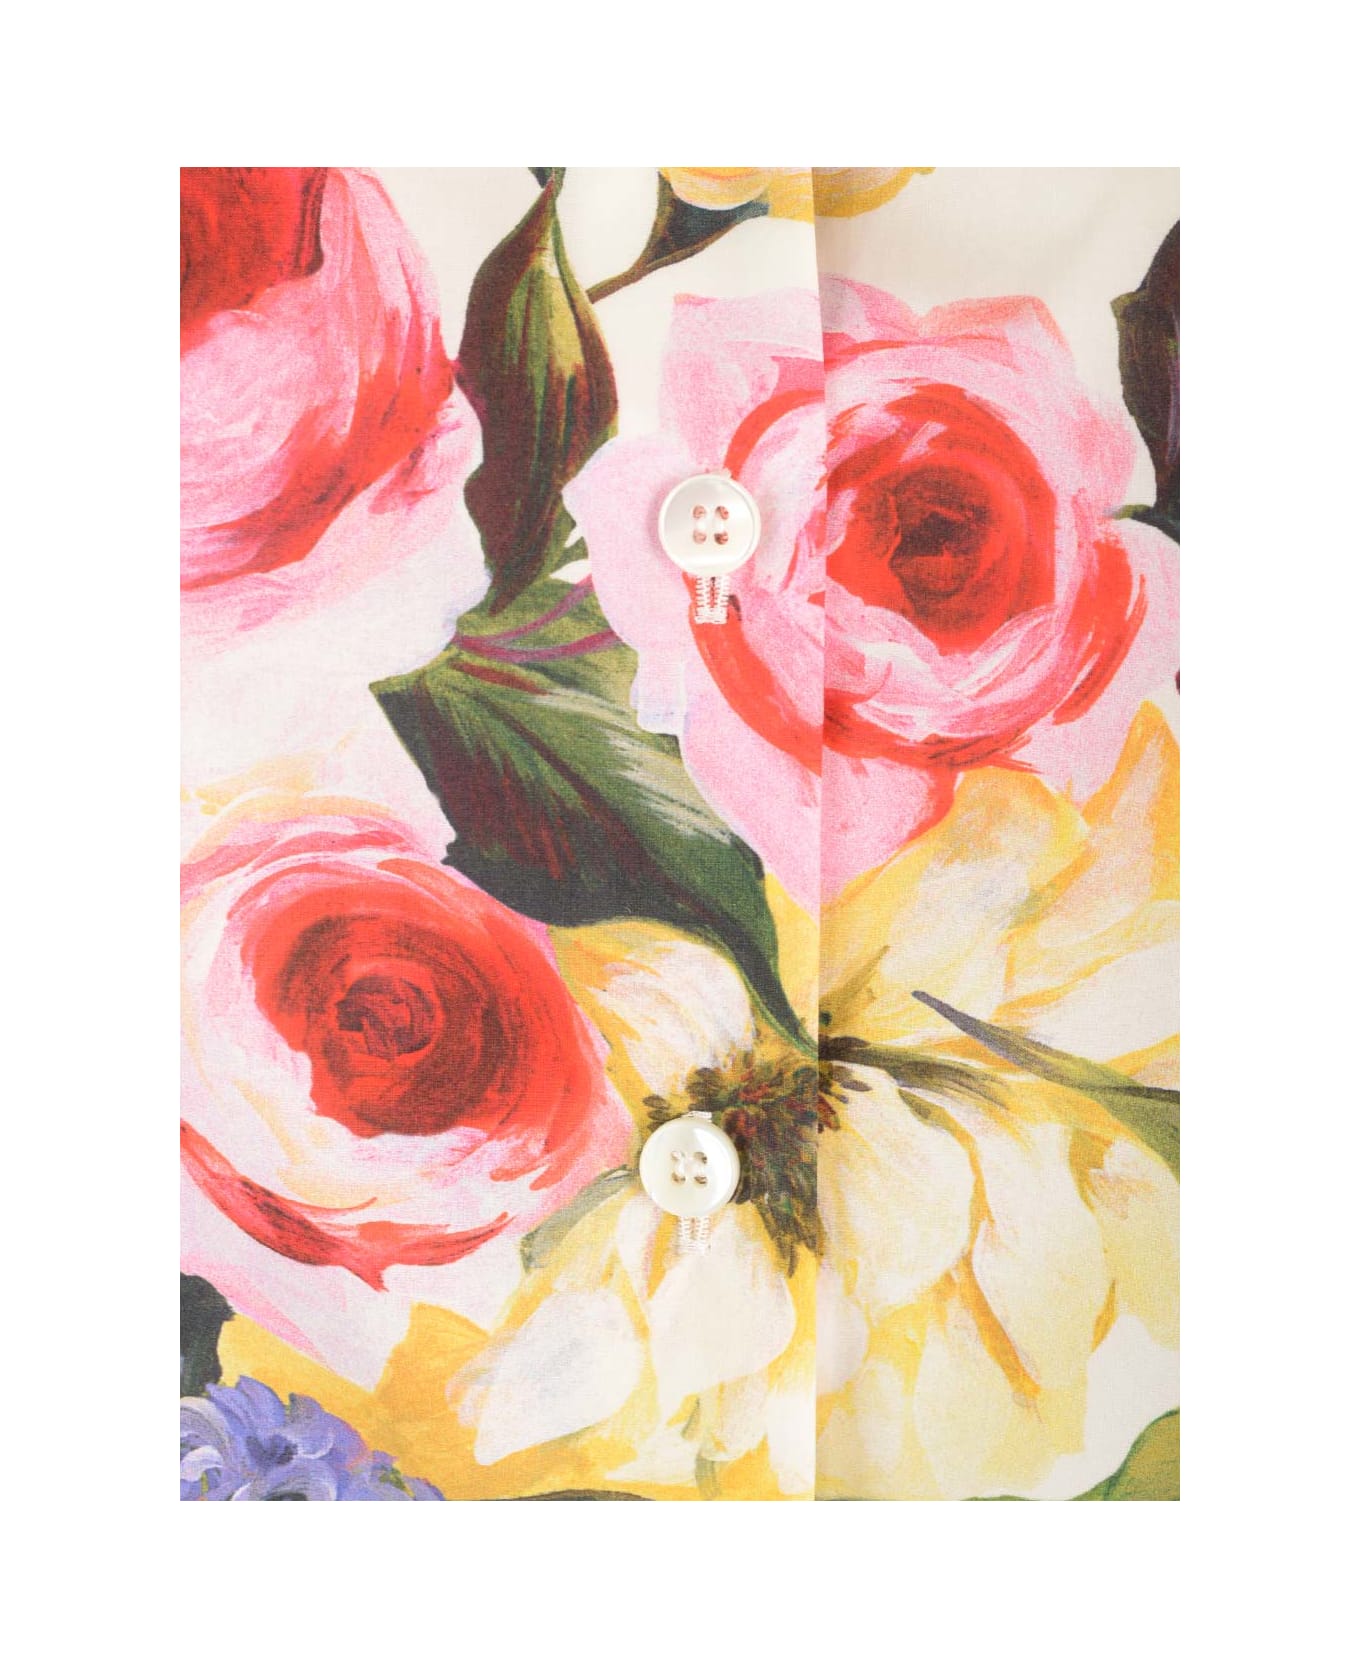 Dolce & Gabbana Floral Print Cotton Shirt - dolce gabbana exclusive to mytheresa pomegranate print silk scarf